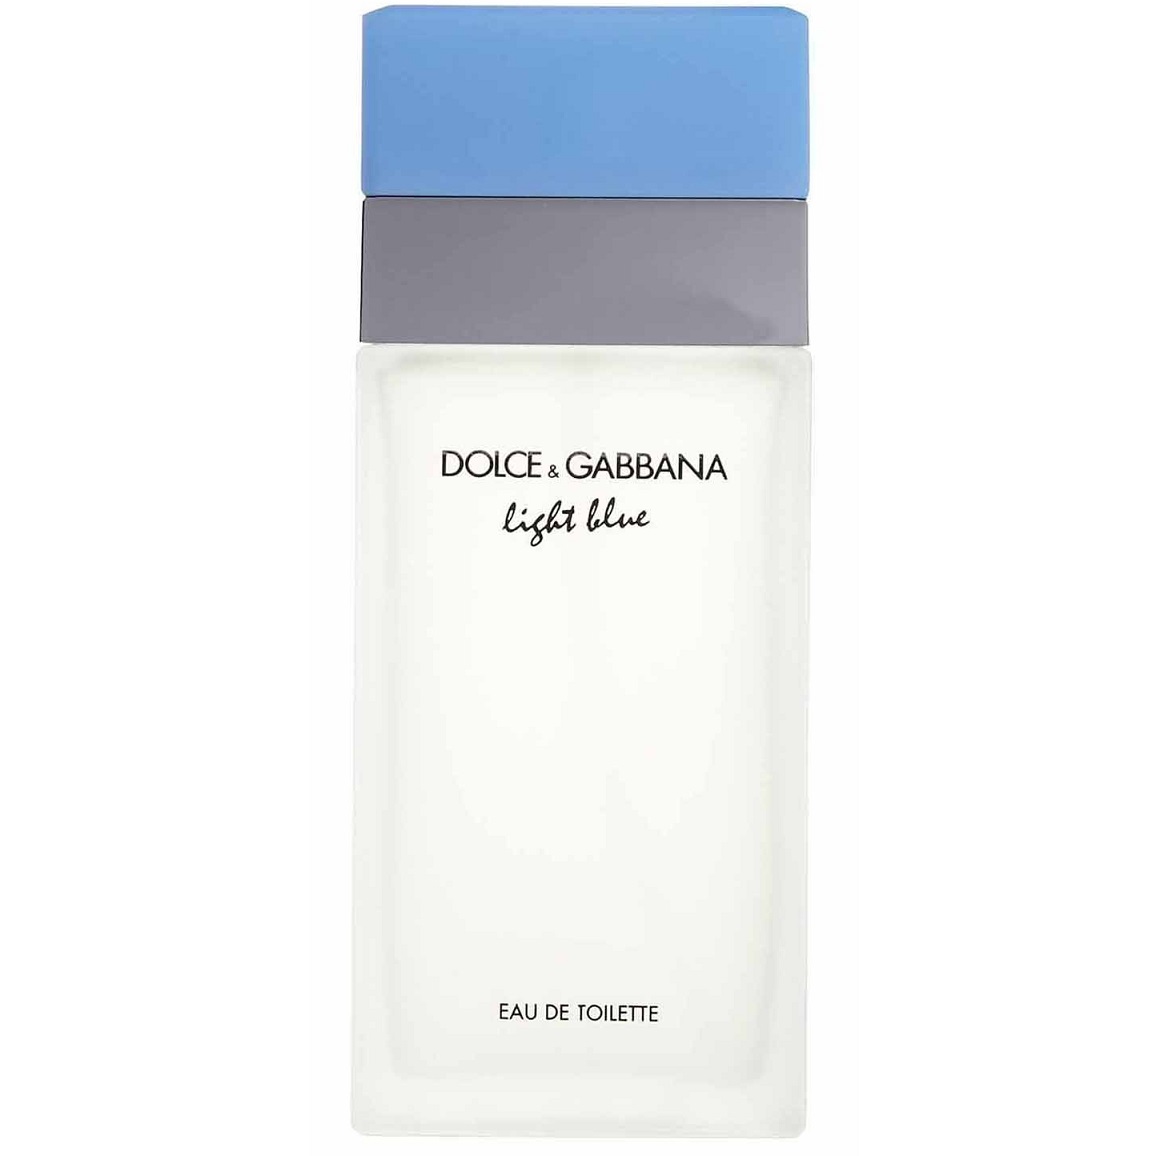 Dolce and Gabbana - Light Blue (1мл)